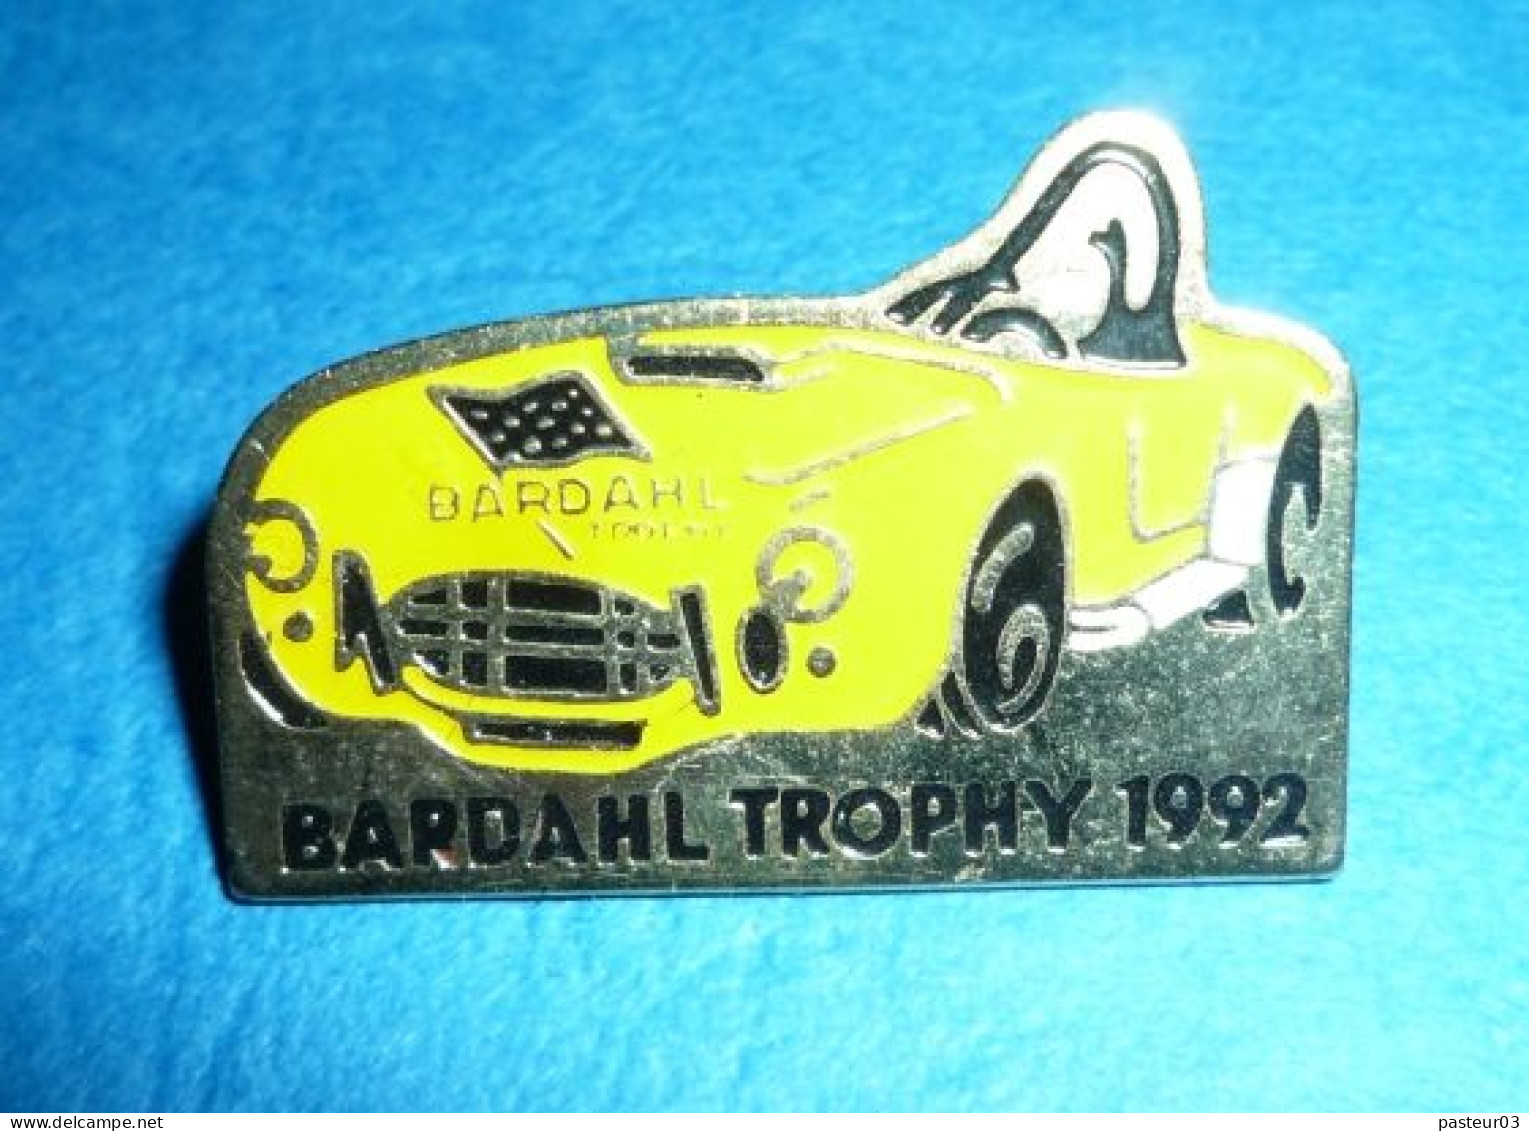 Bardhal Trophy 1992 Compétition Véhicules De Colletions Nevers Magny Cours (1ex.) - Brandstoffen